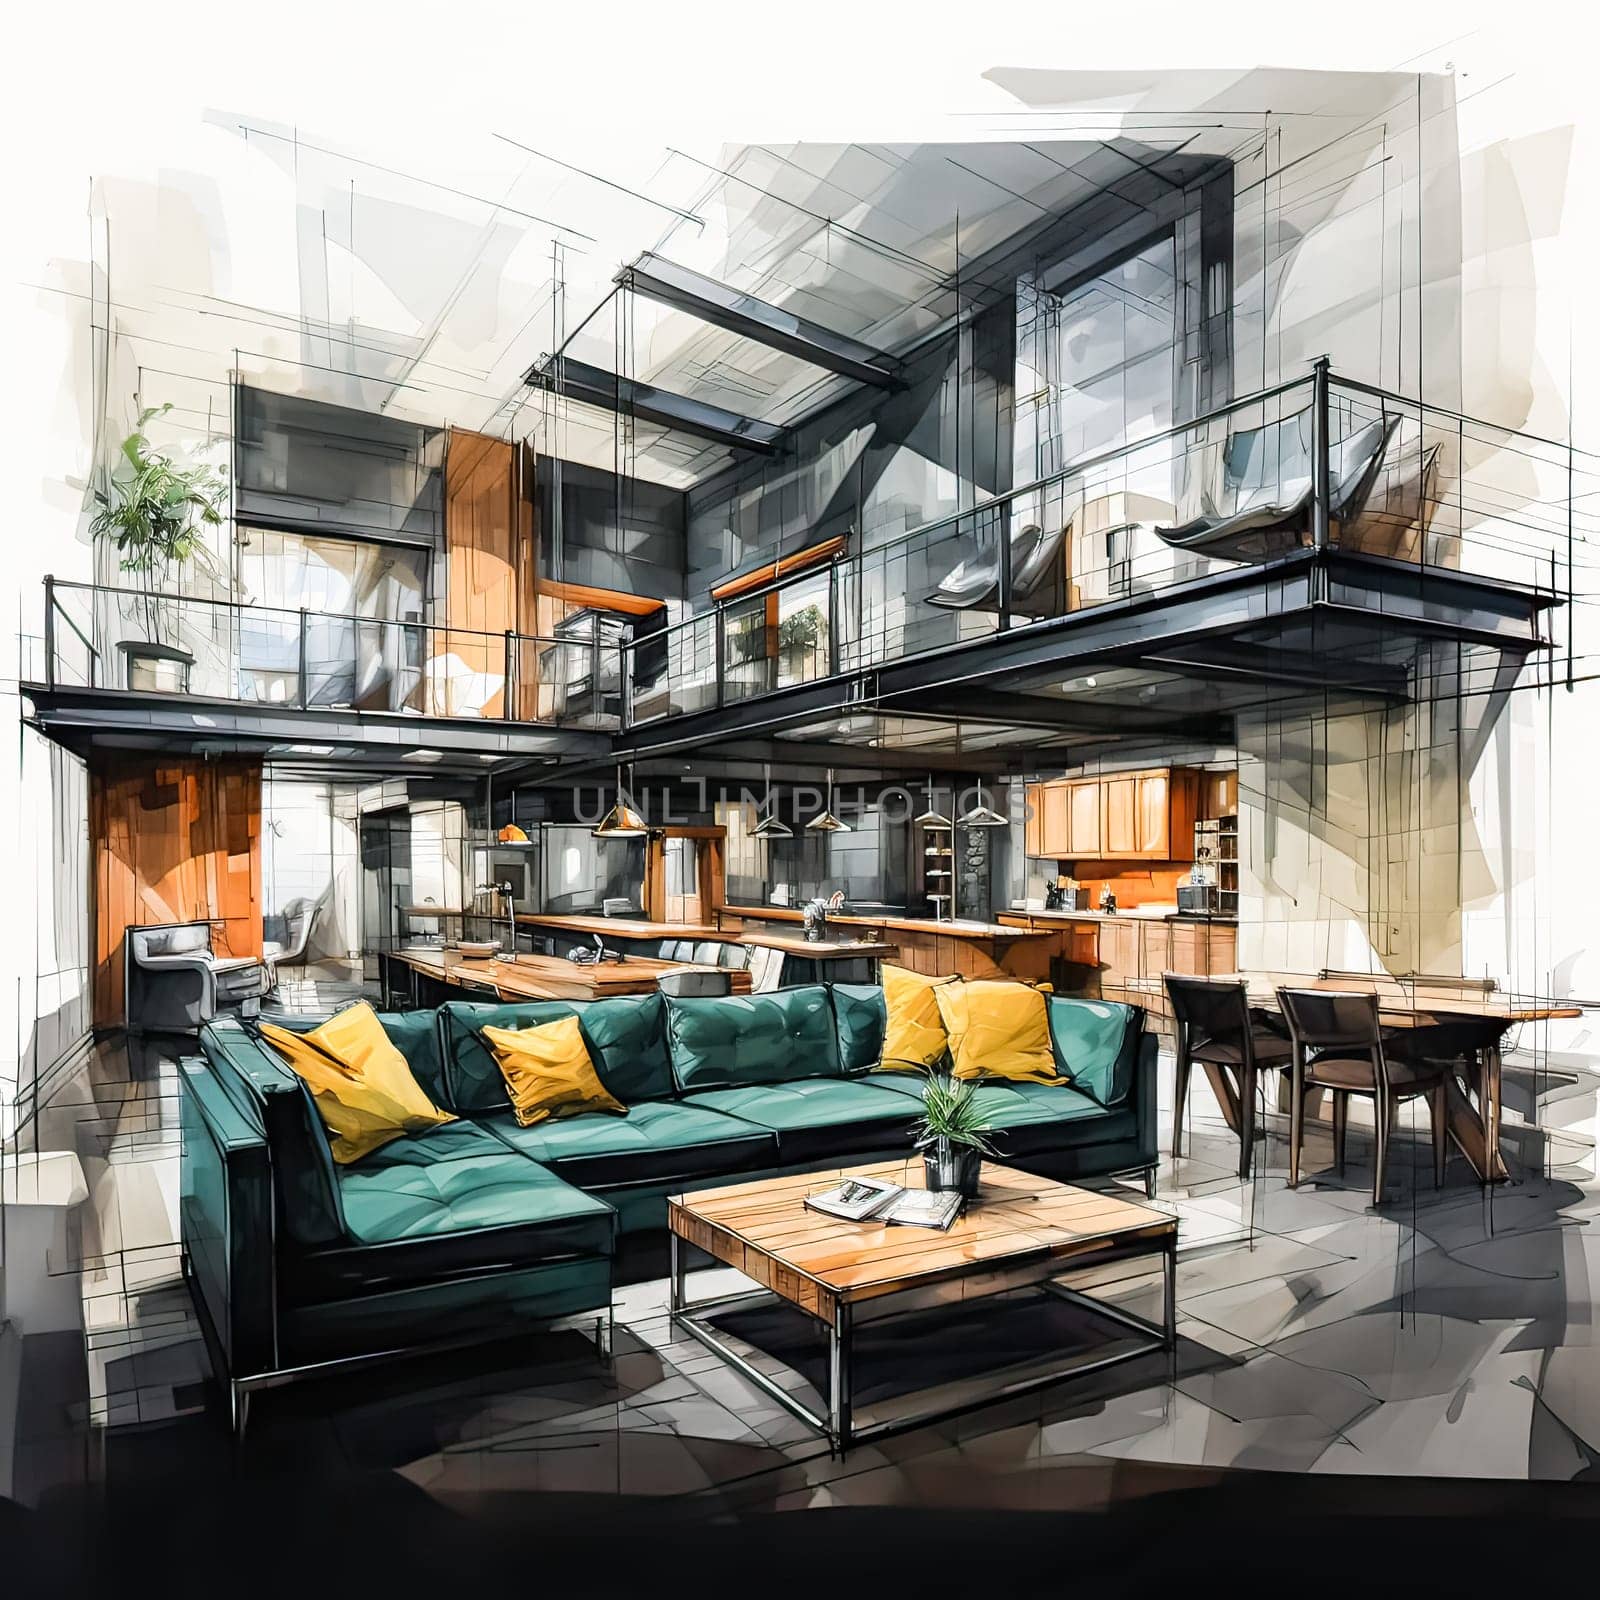 Loft Dreamscape, Watercolor art captures the chic design of a loft style apartment in vibrant hues